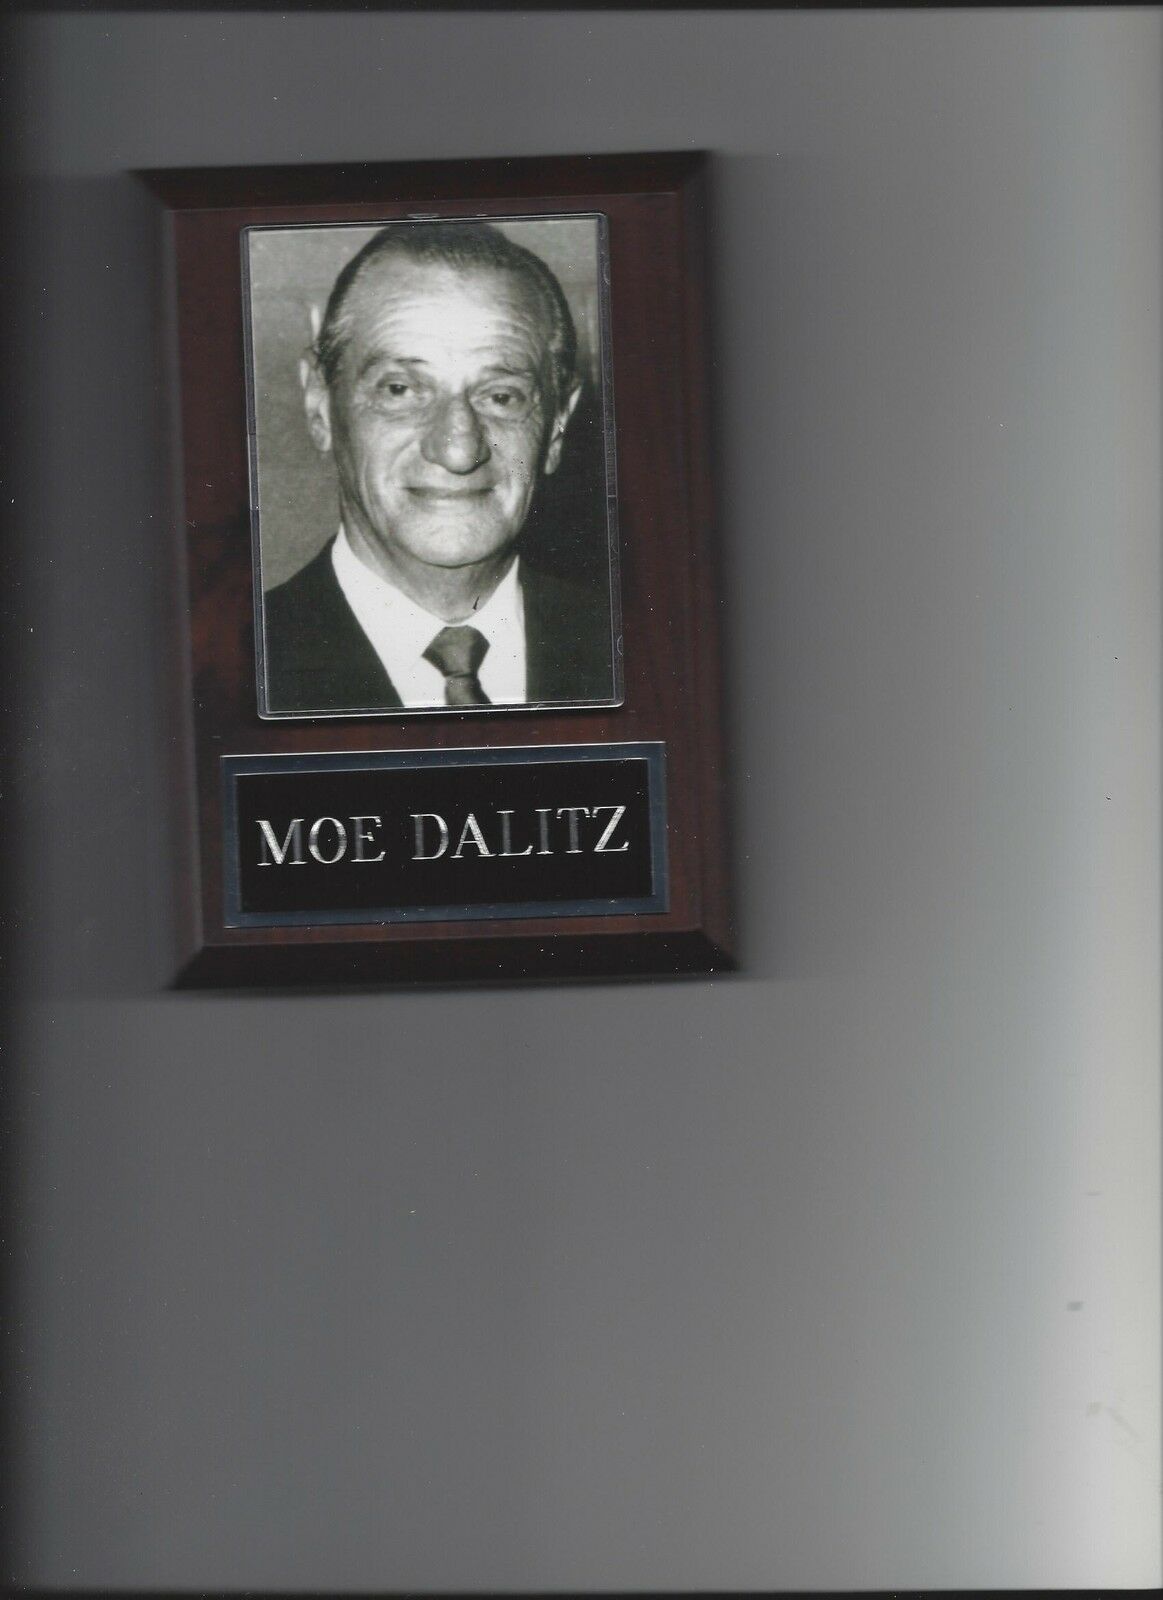 Primary image for MOE DALITZ PLAQUE MAFIA ORGANIZED CRIME MOBSTER MOB